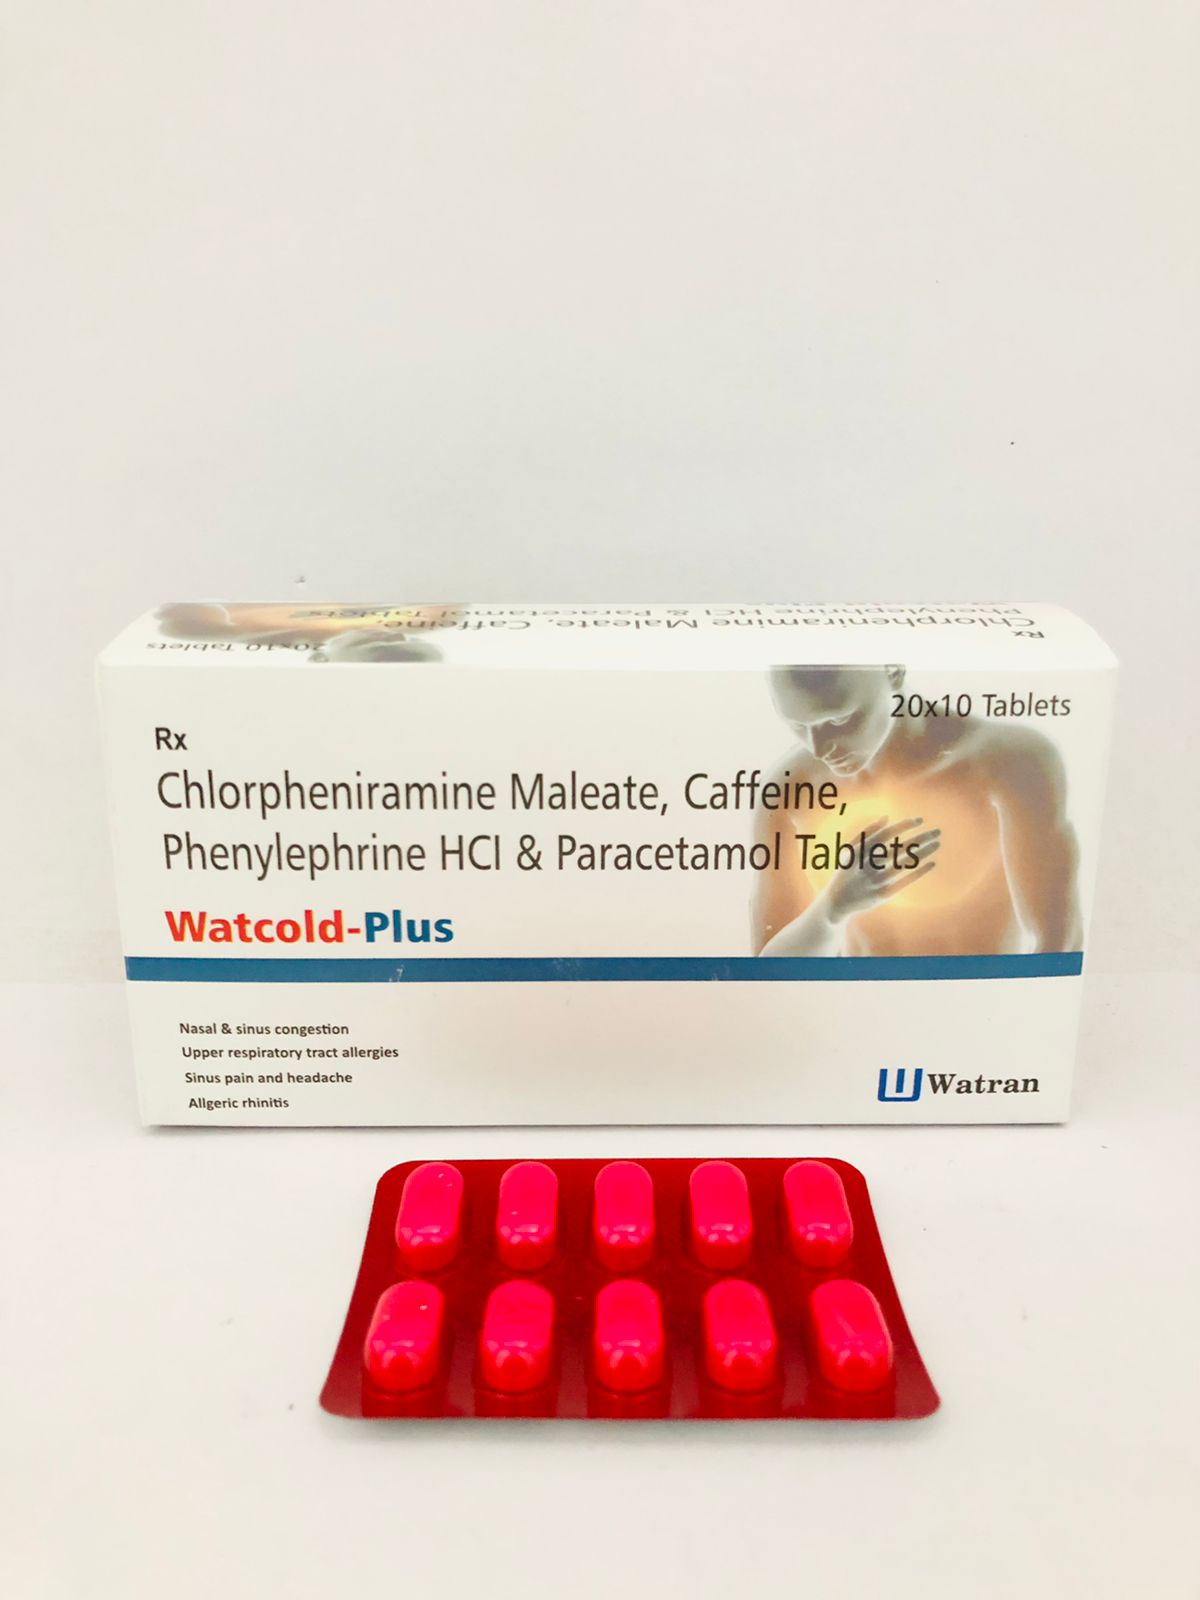 Paracetamol 650 mg + Chlorpheniramine Maleate 2 mg + Caffeine 25 mg + Phenylepherine Hcl 5 mg